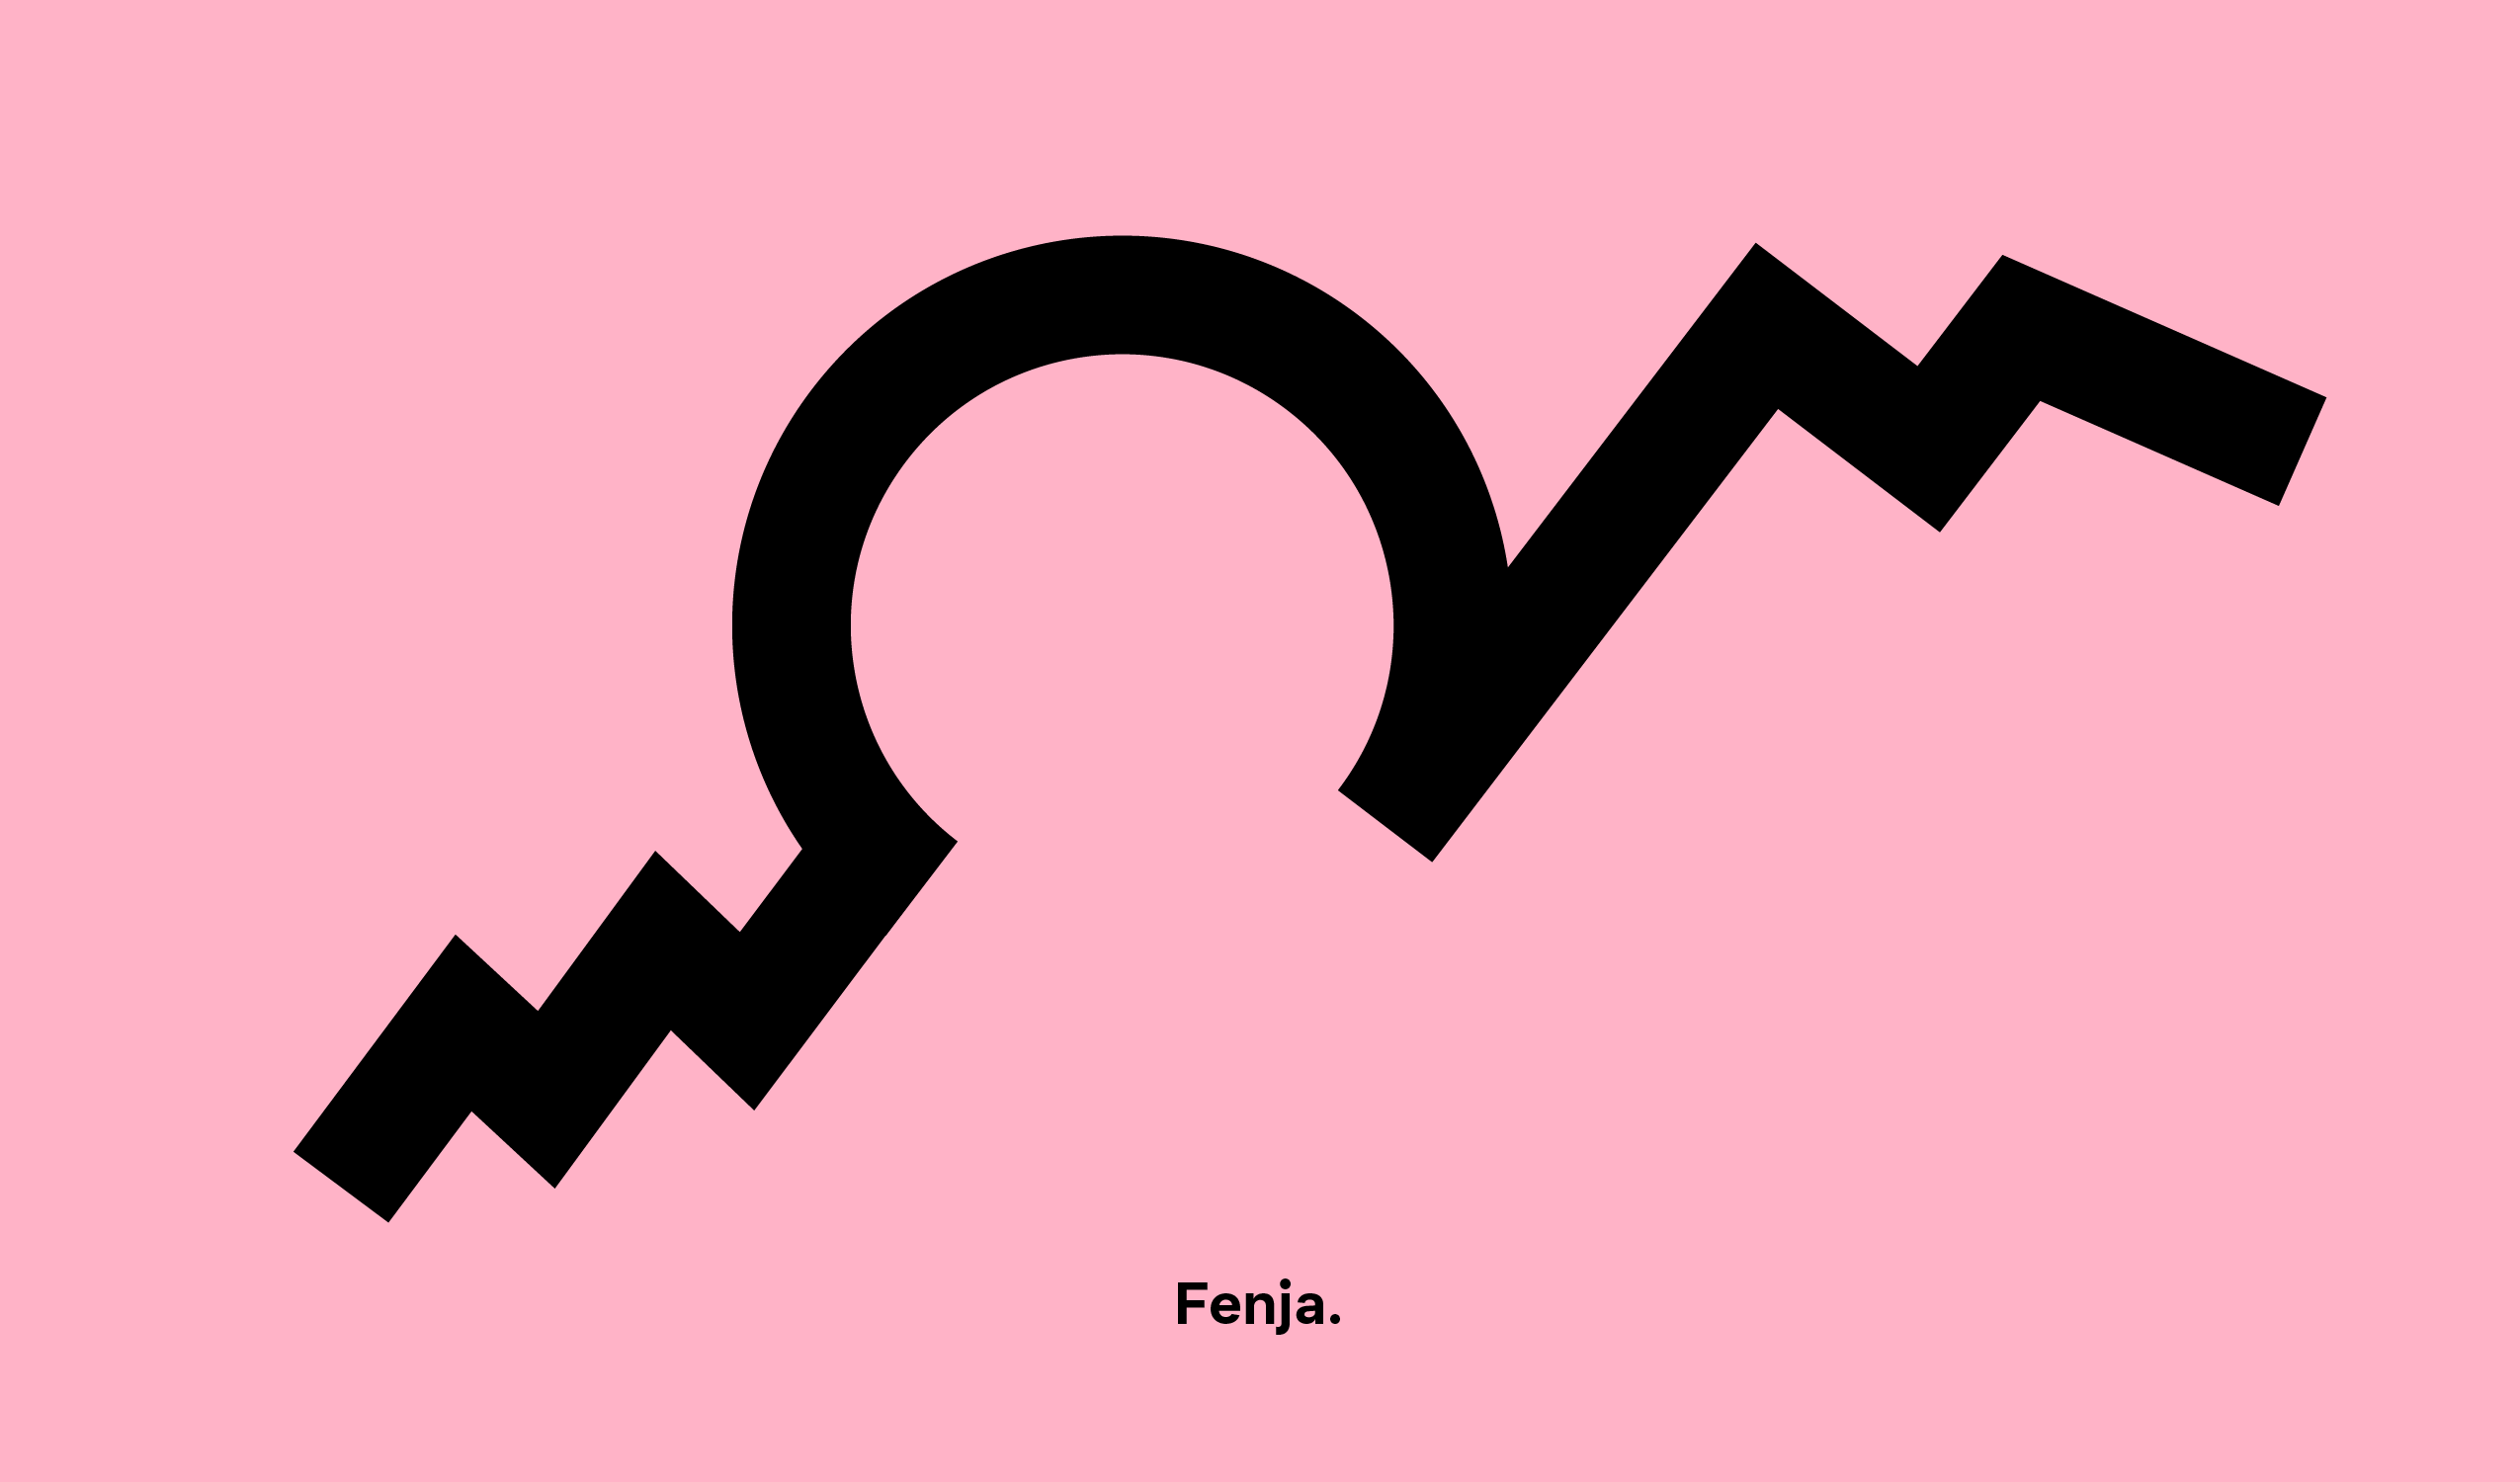 Fenja's career path